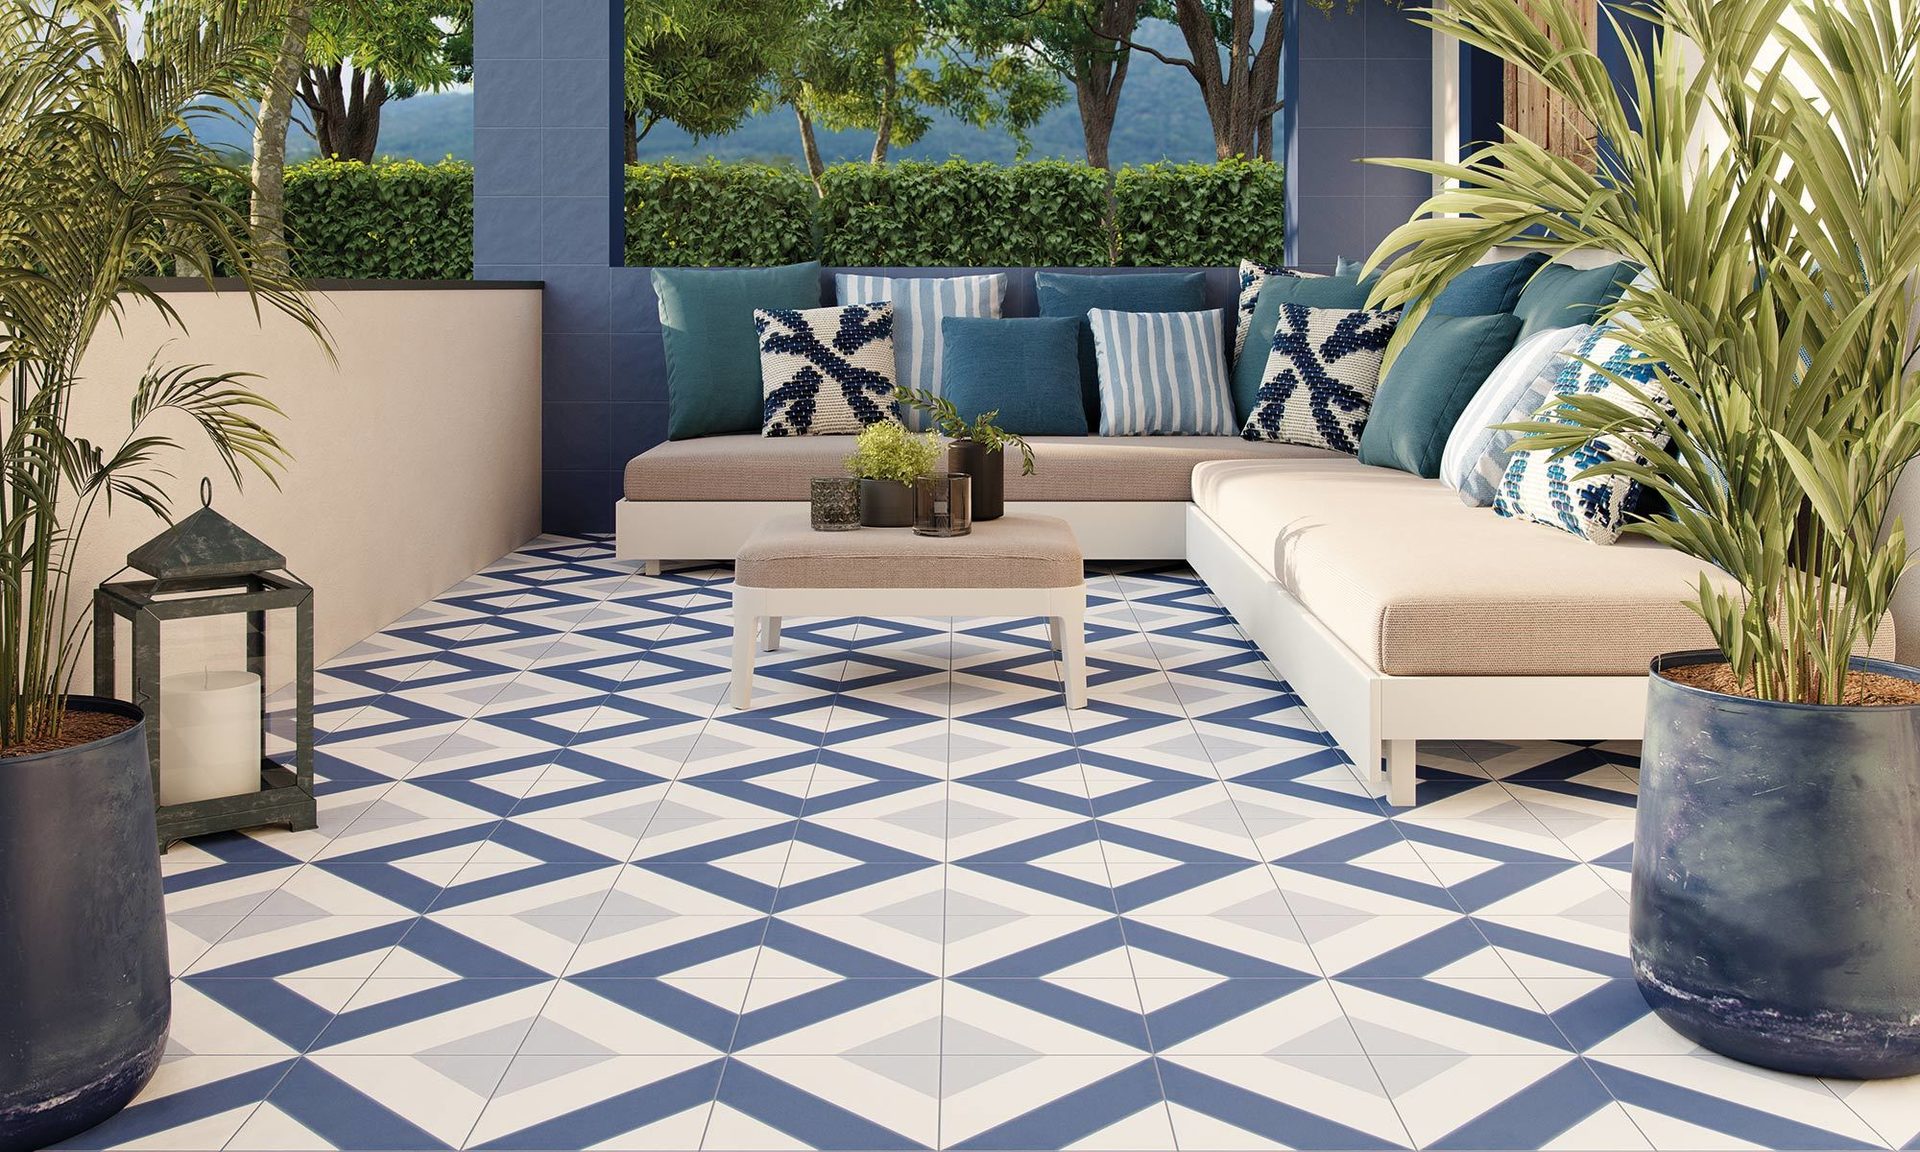 Interior design, Outdoor furniture, Living room, Tile flooring, Plant, Property, Couch, Azure, Floor